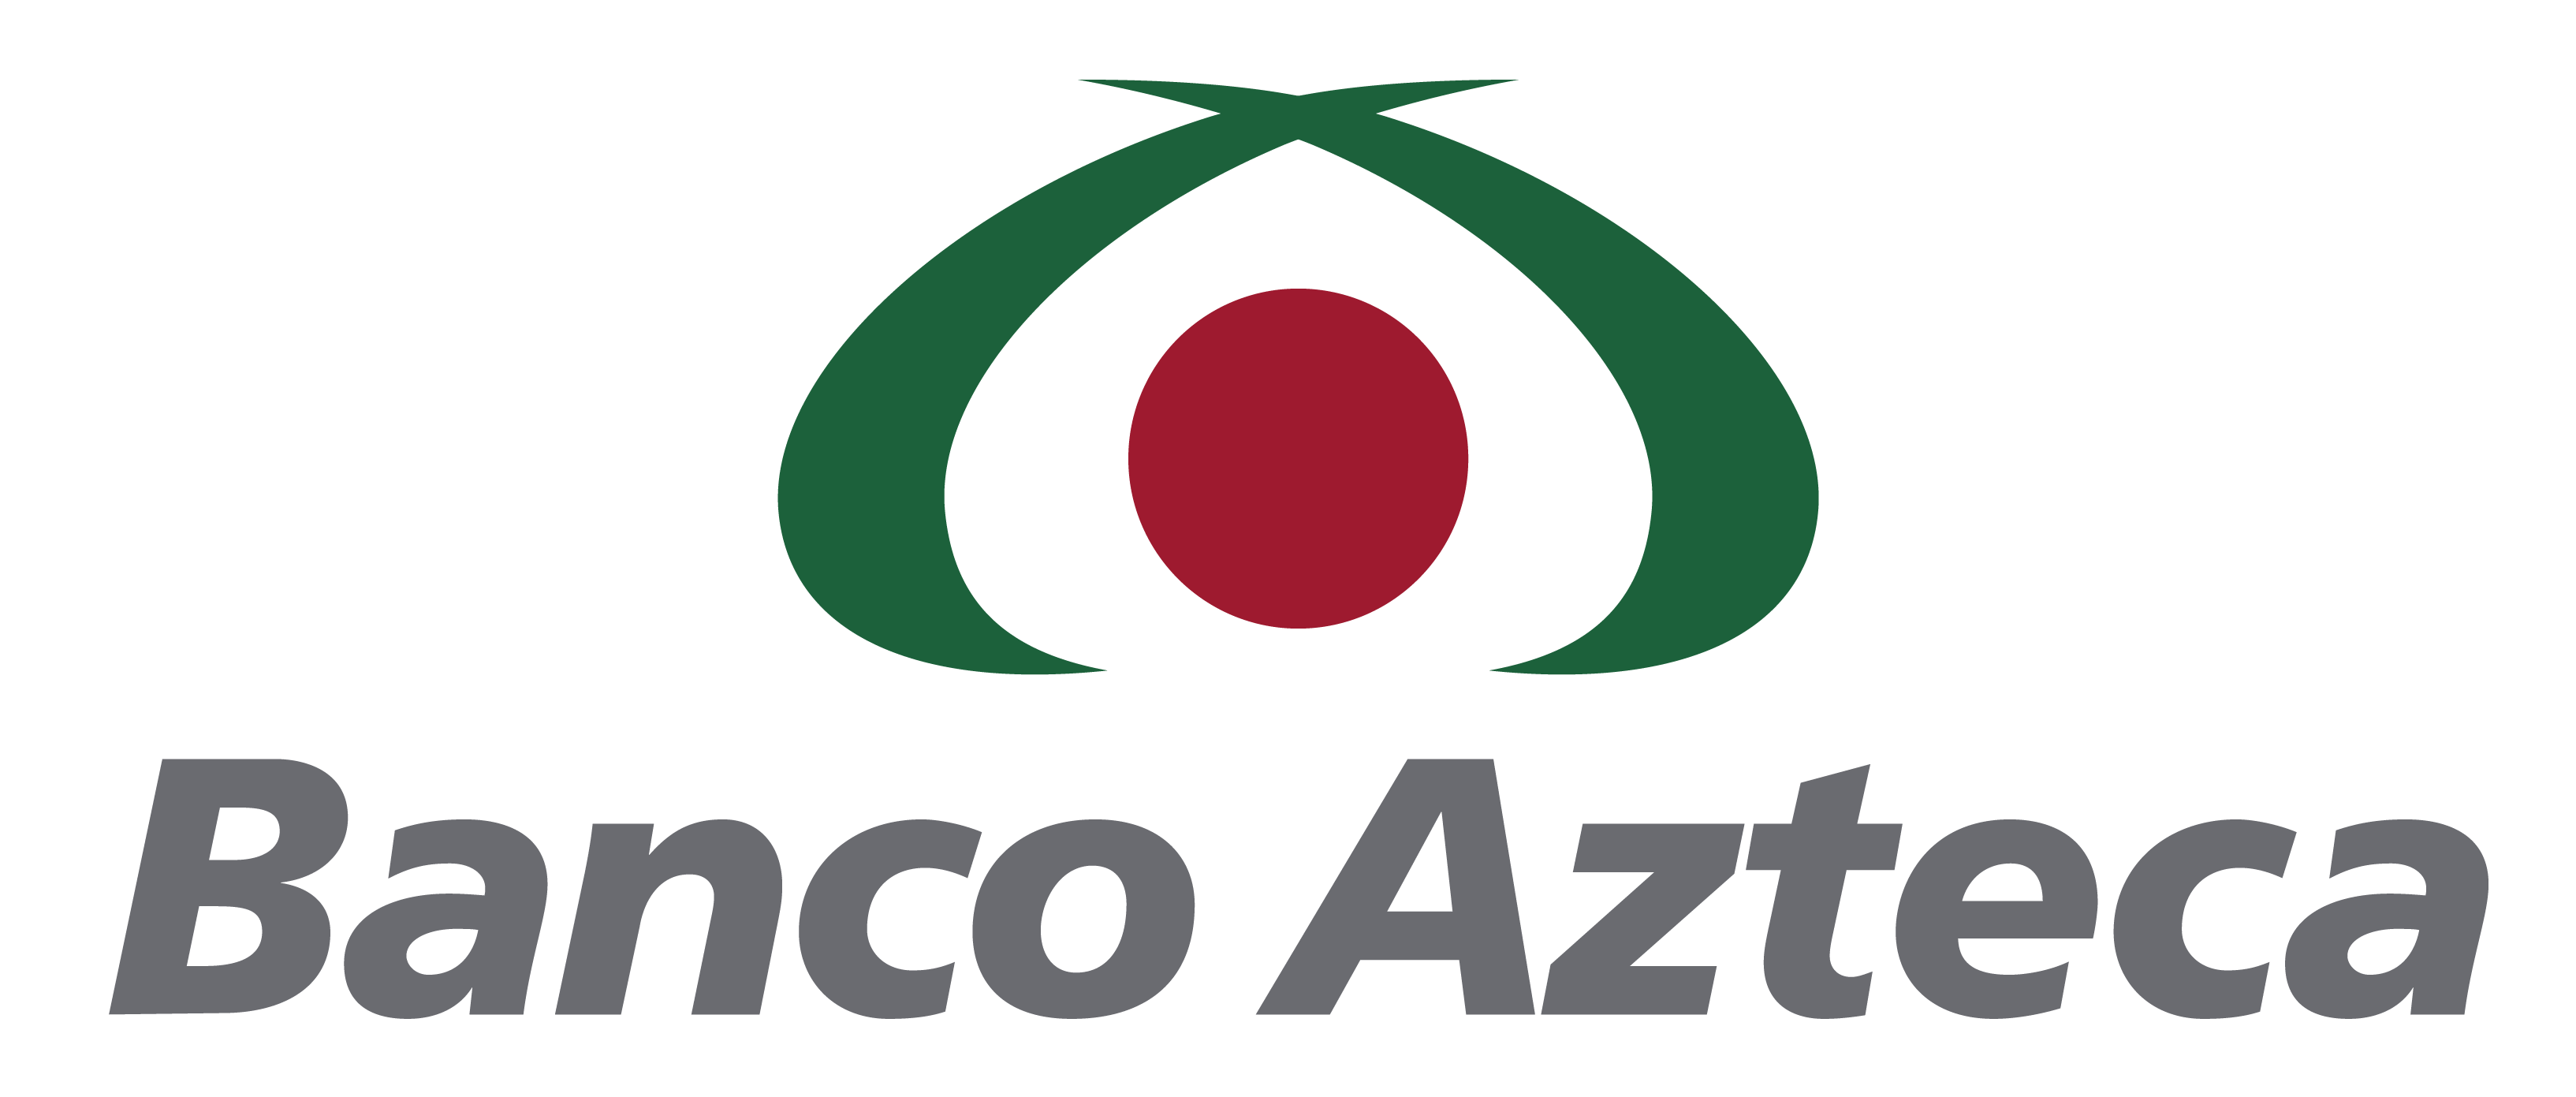 BANCO-AZTECA-LOGO-02